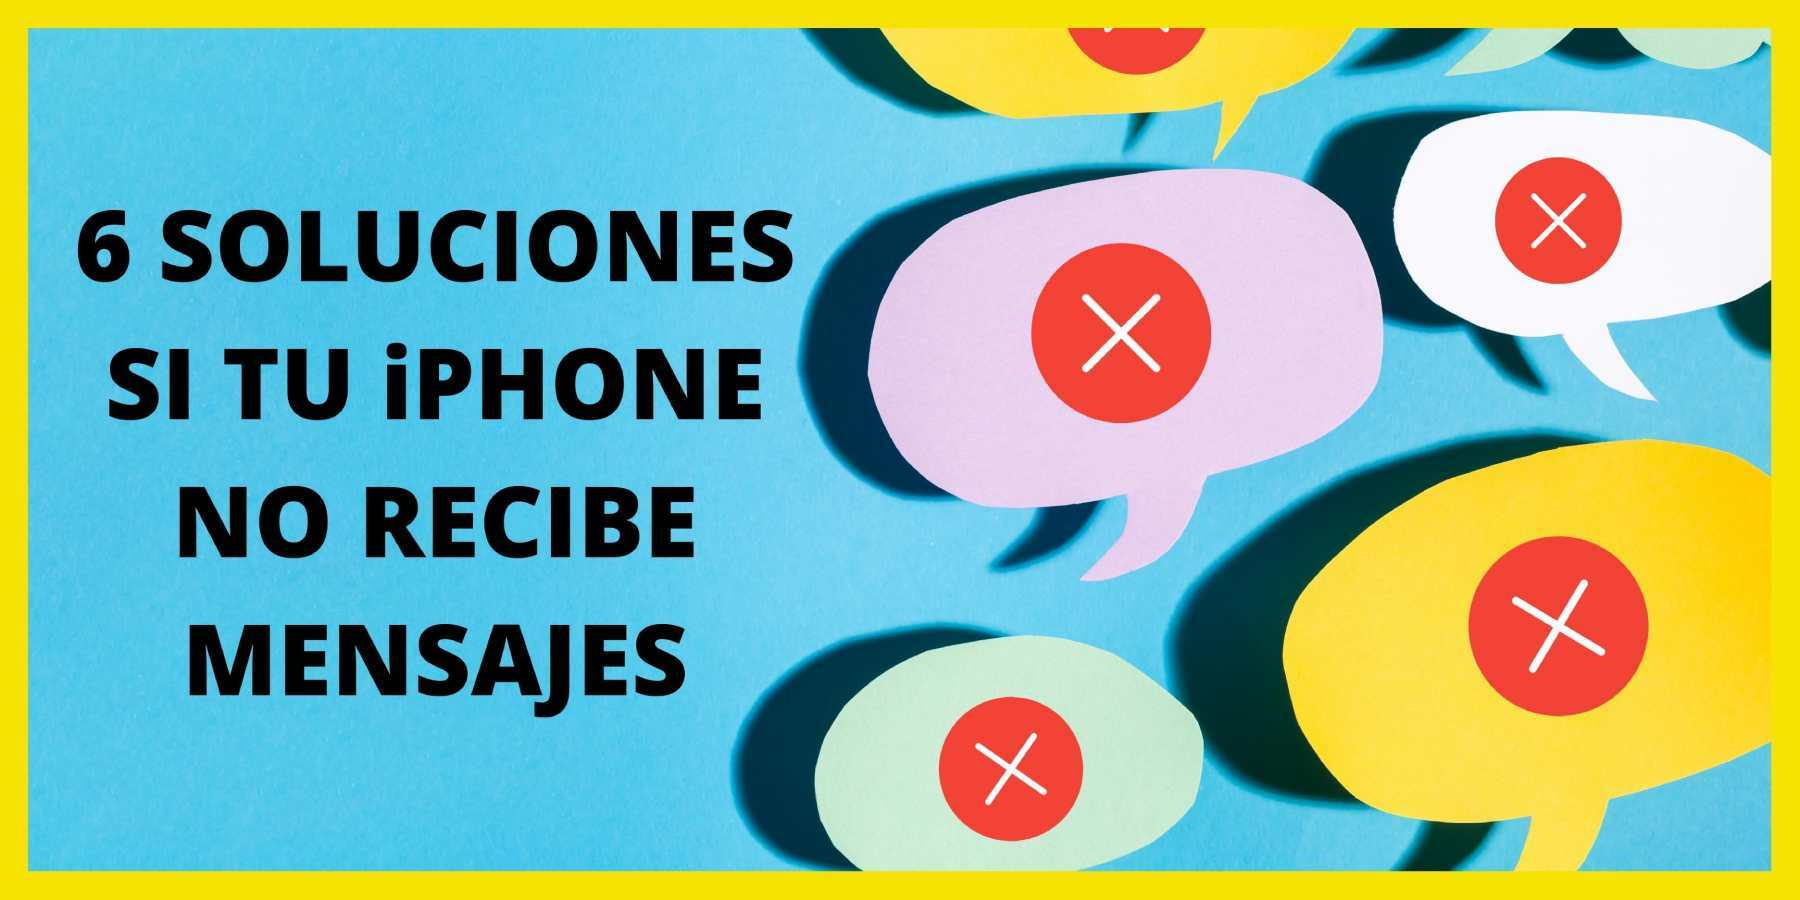 6 soluciones si tu iphone no recibe mensajes